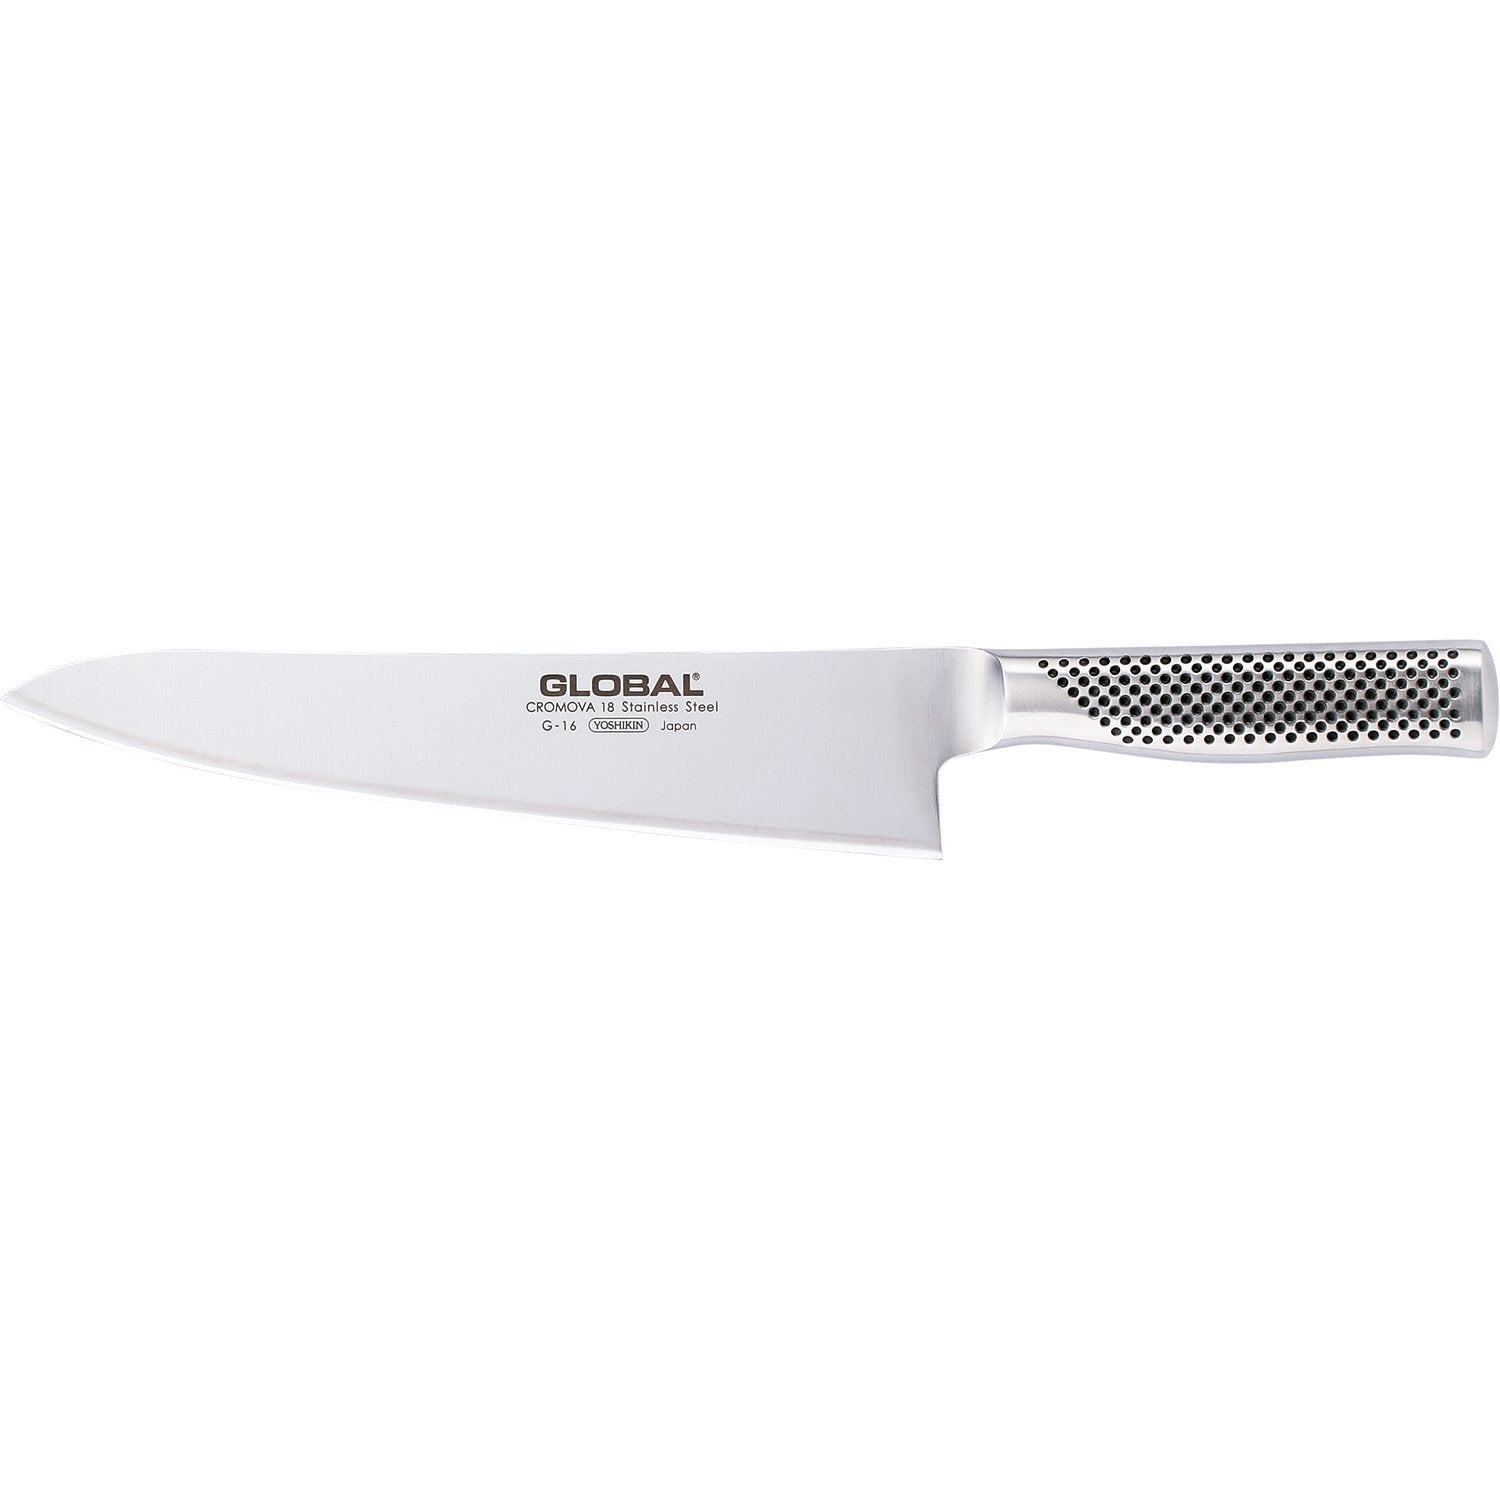 Global G 16 Chefův nůž, 24 cm